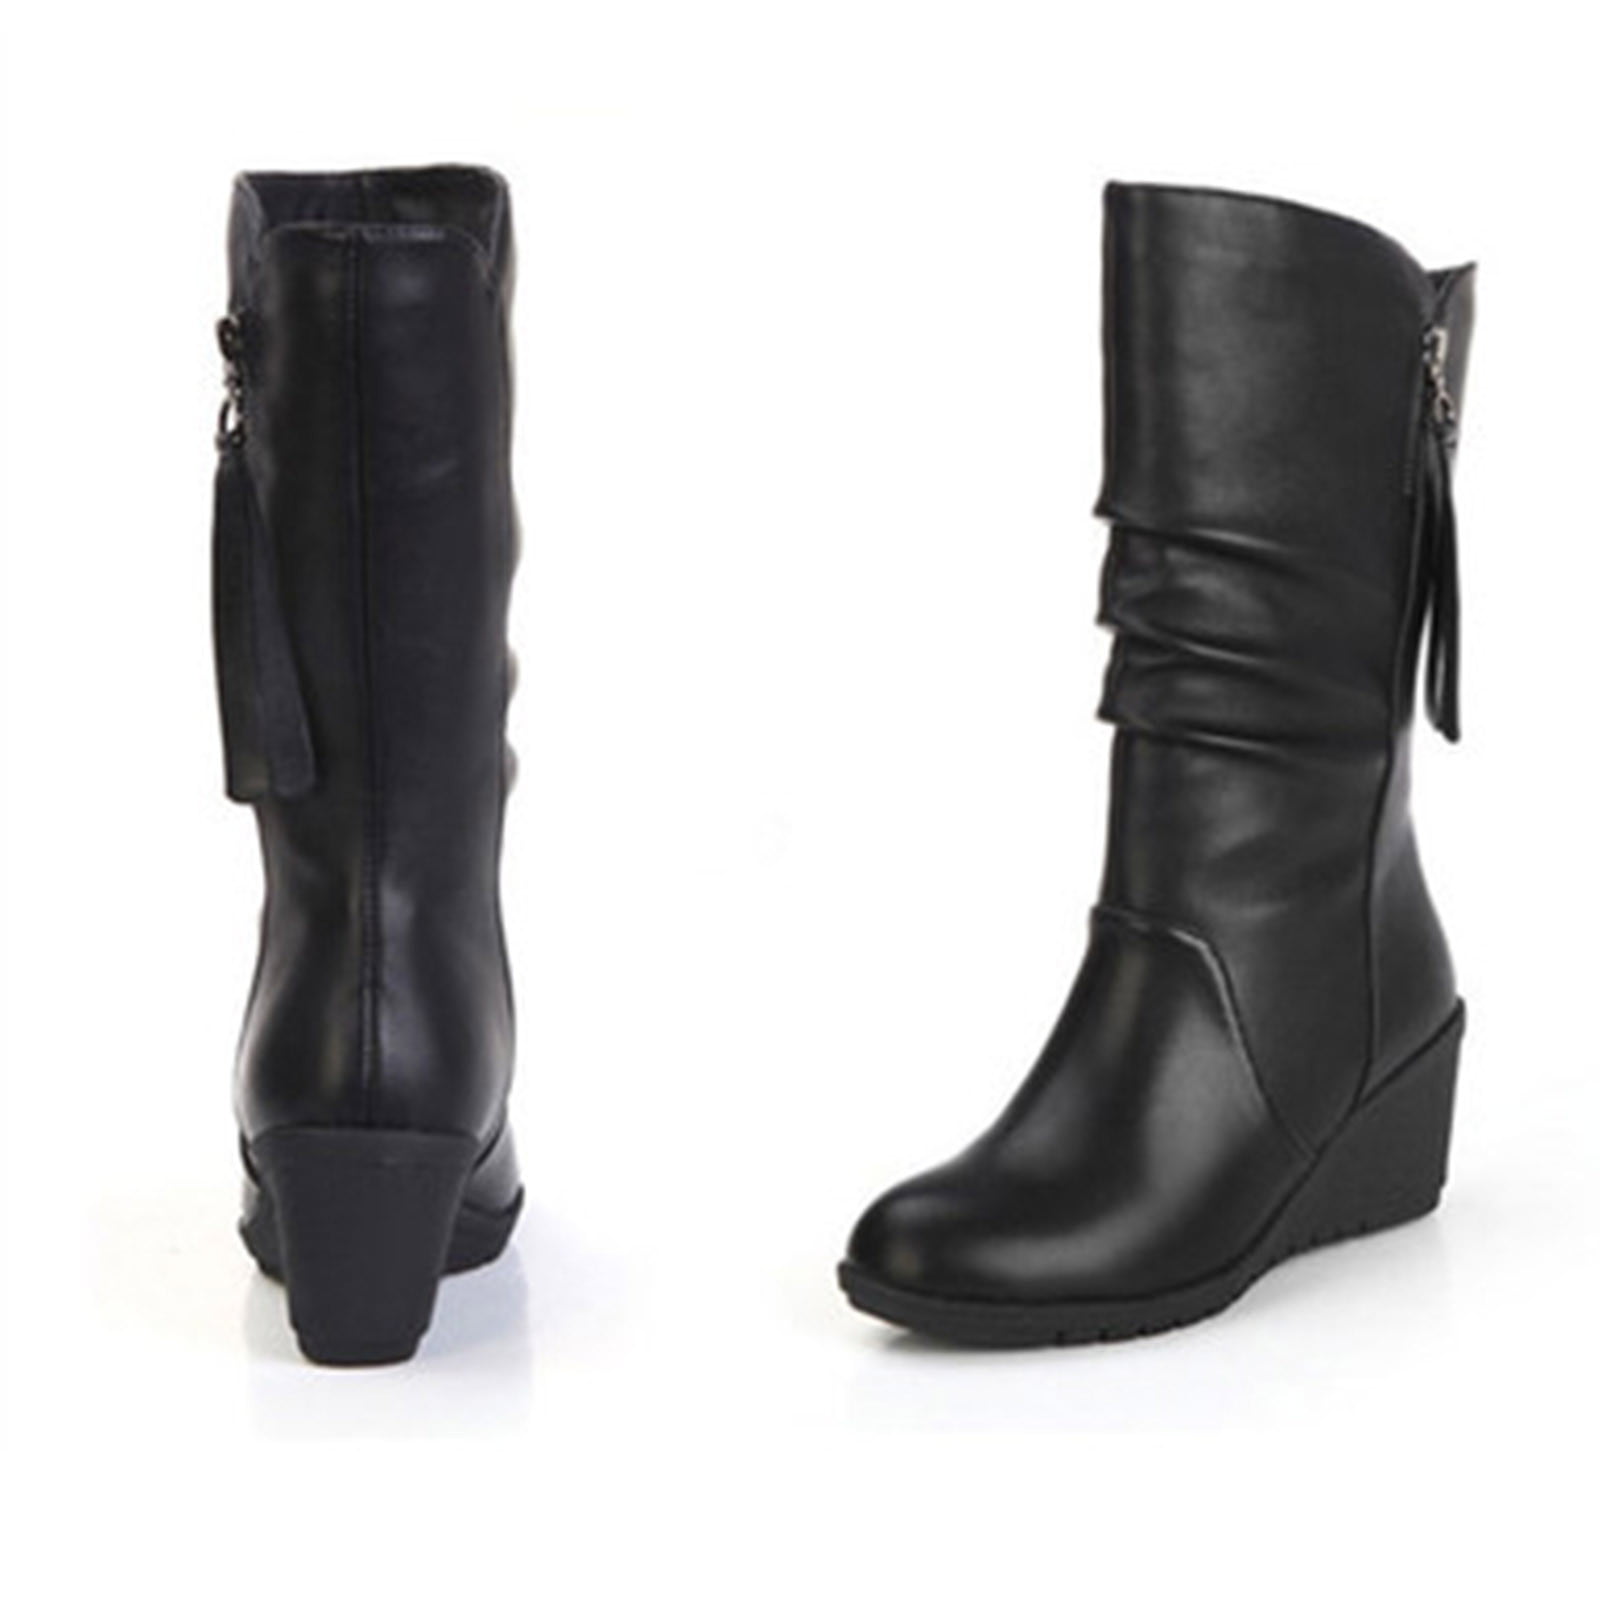 Tejiojio Clearance Women Ankle Boots High Heel Casual Female Fashion  Platform Wedge Heel Zip Mid-Calf Black Shoes